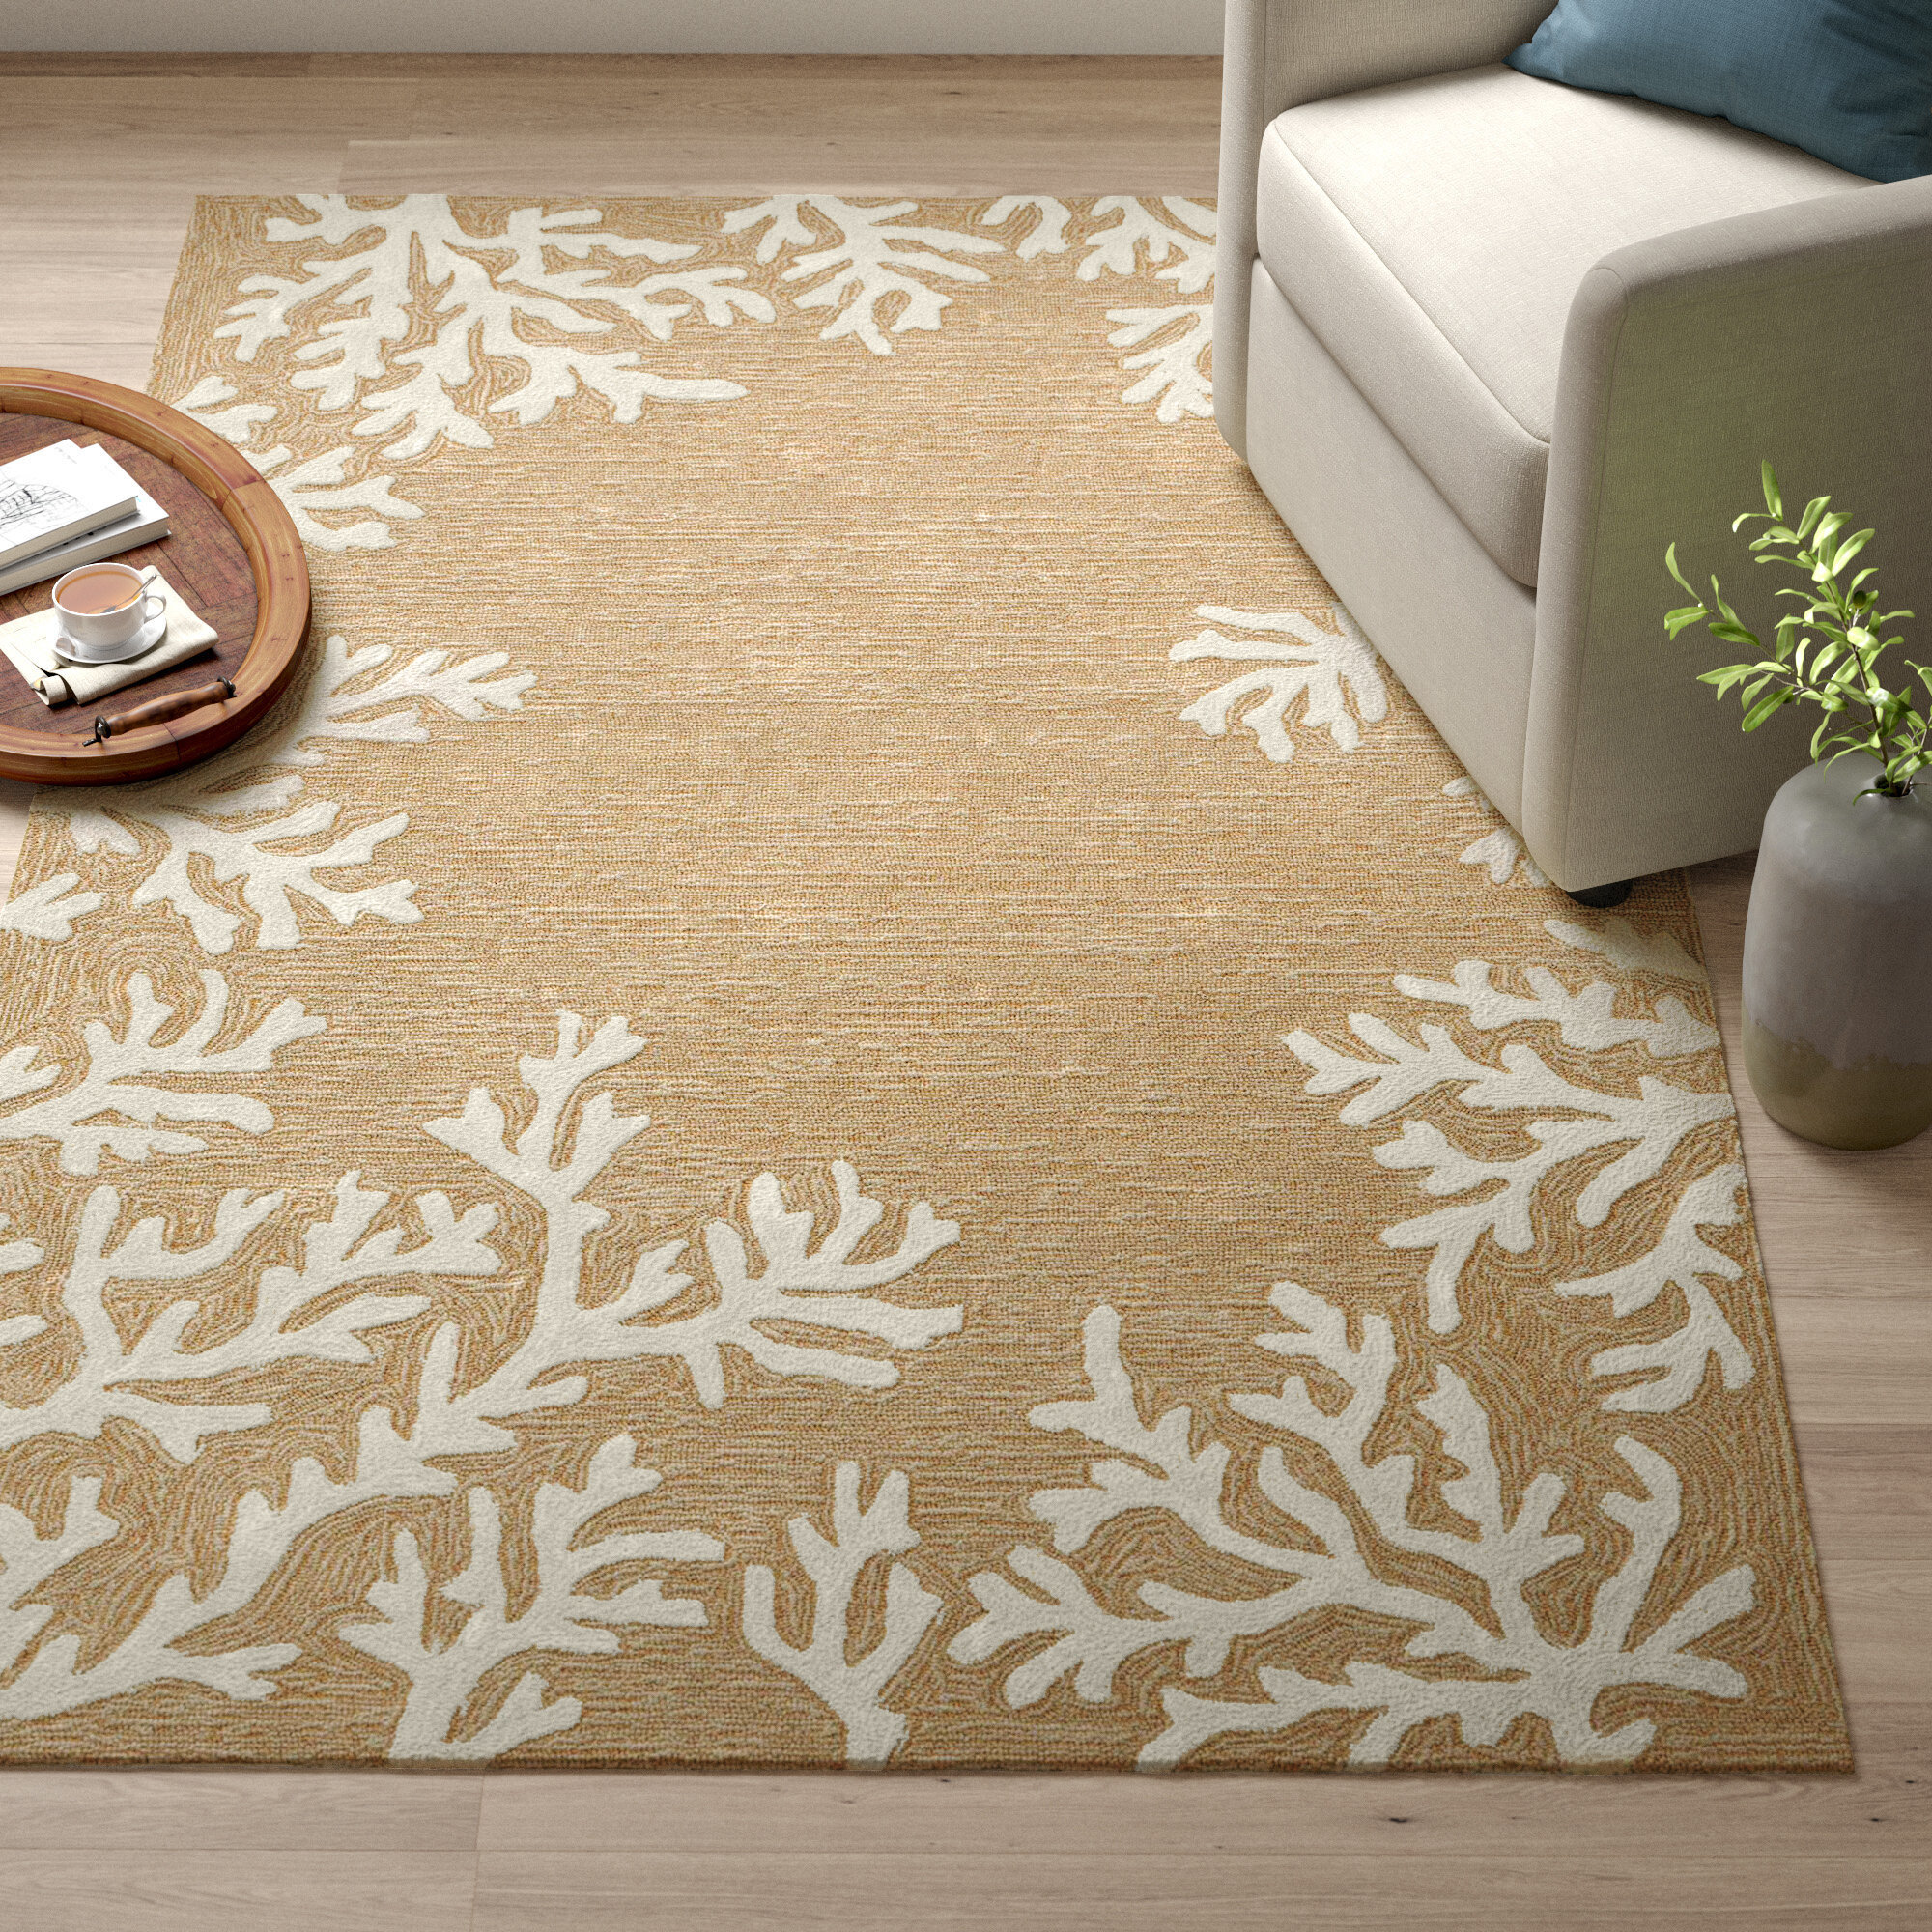 Heart Shaped Tree Stump Pattern Area Rugs Bedroom Carpet Living Room Floor Mat 